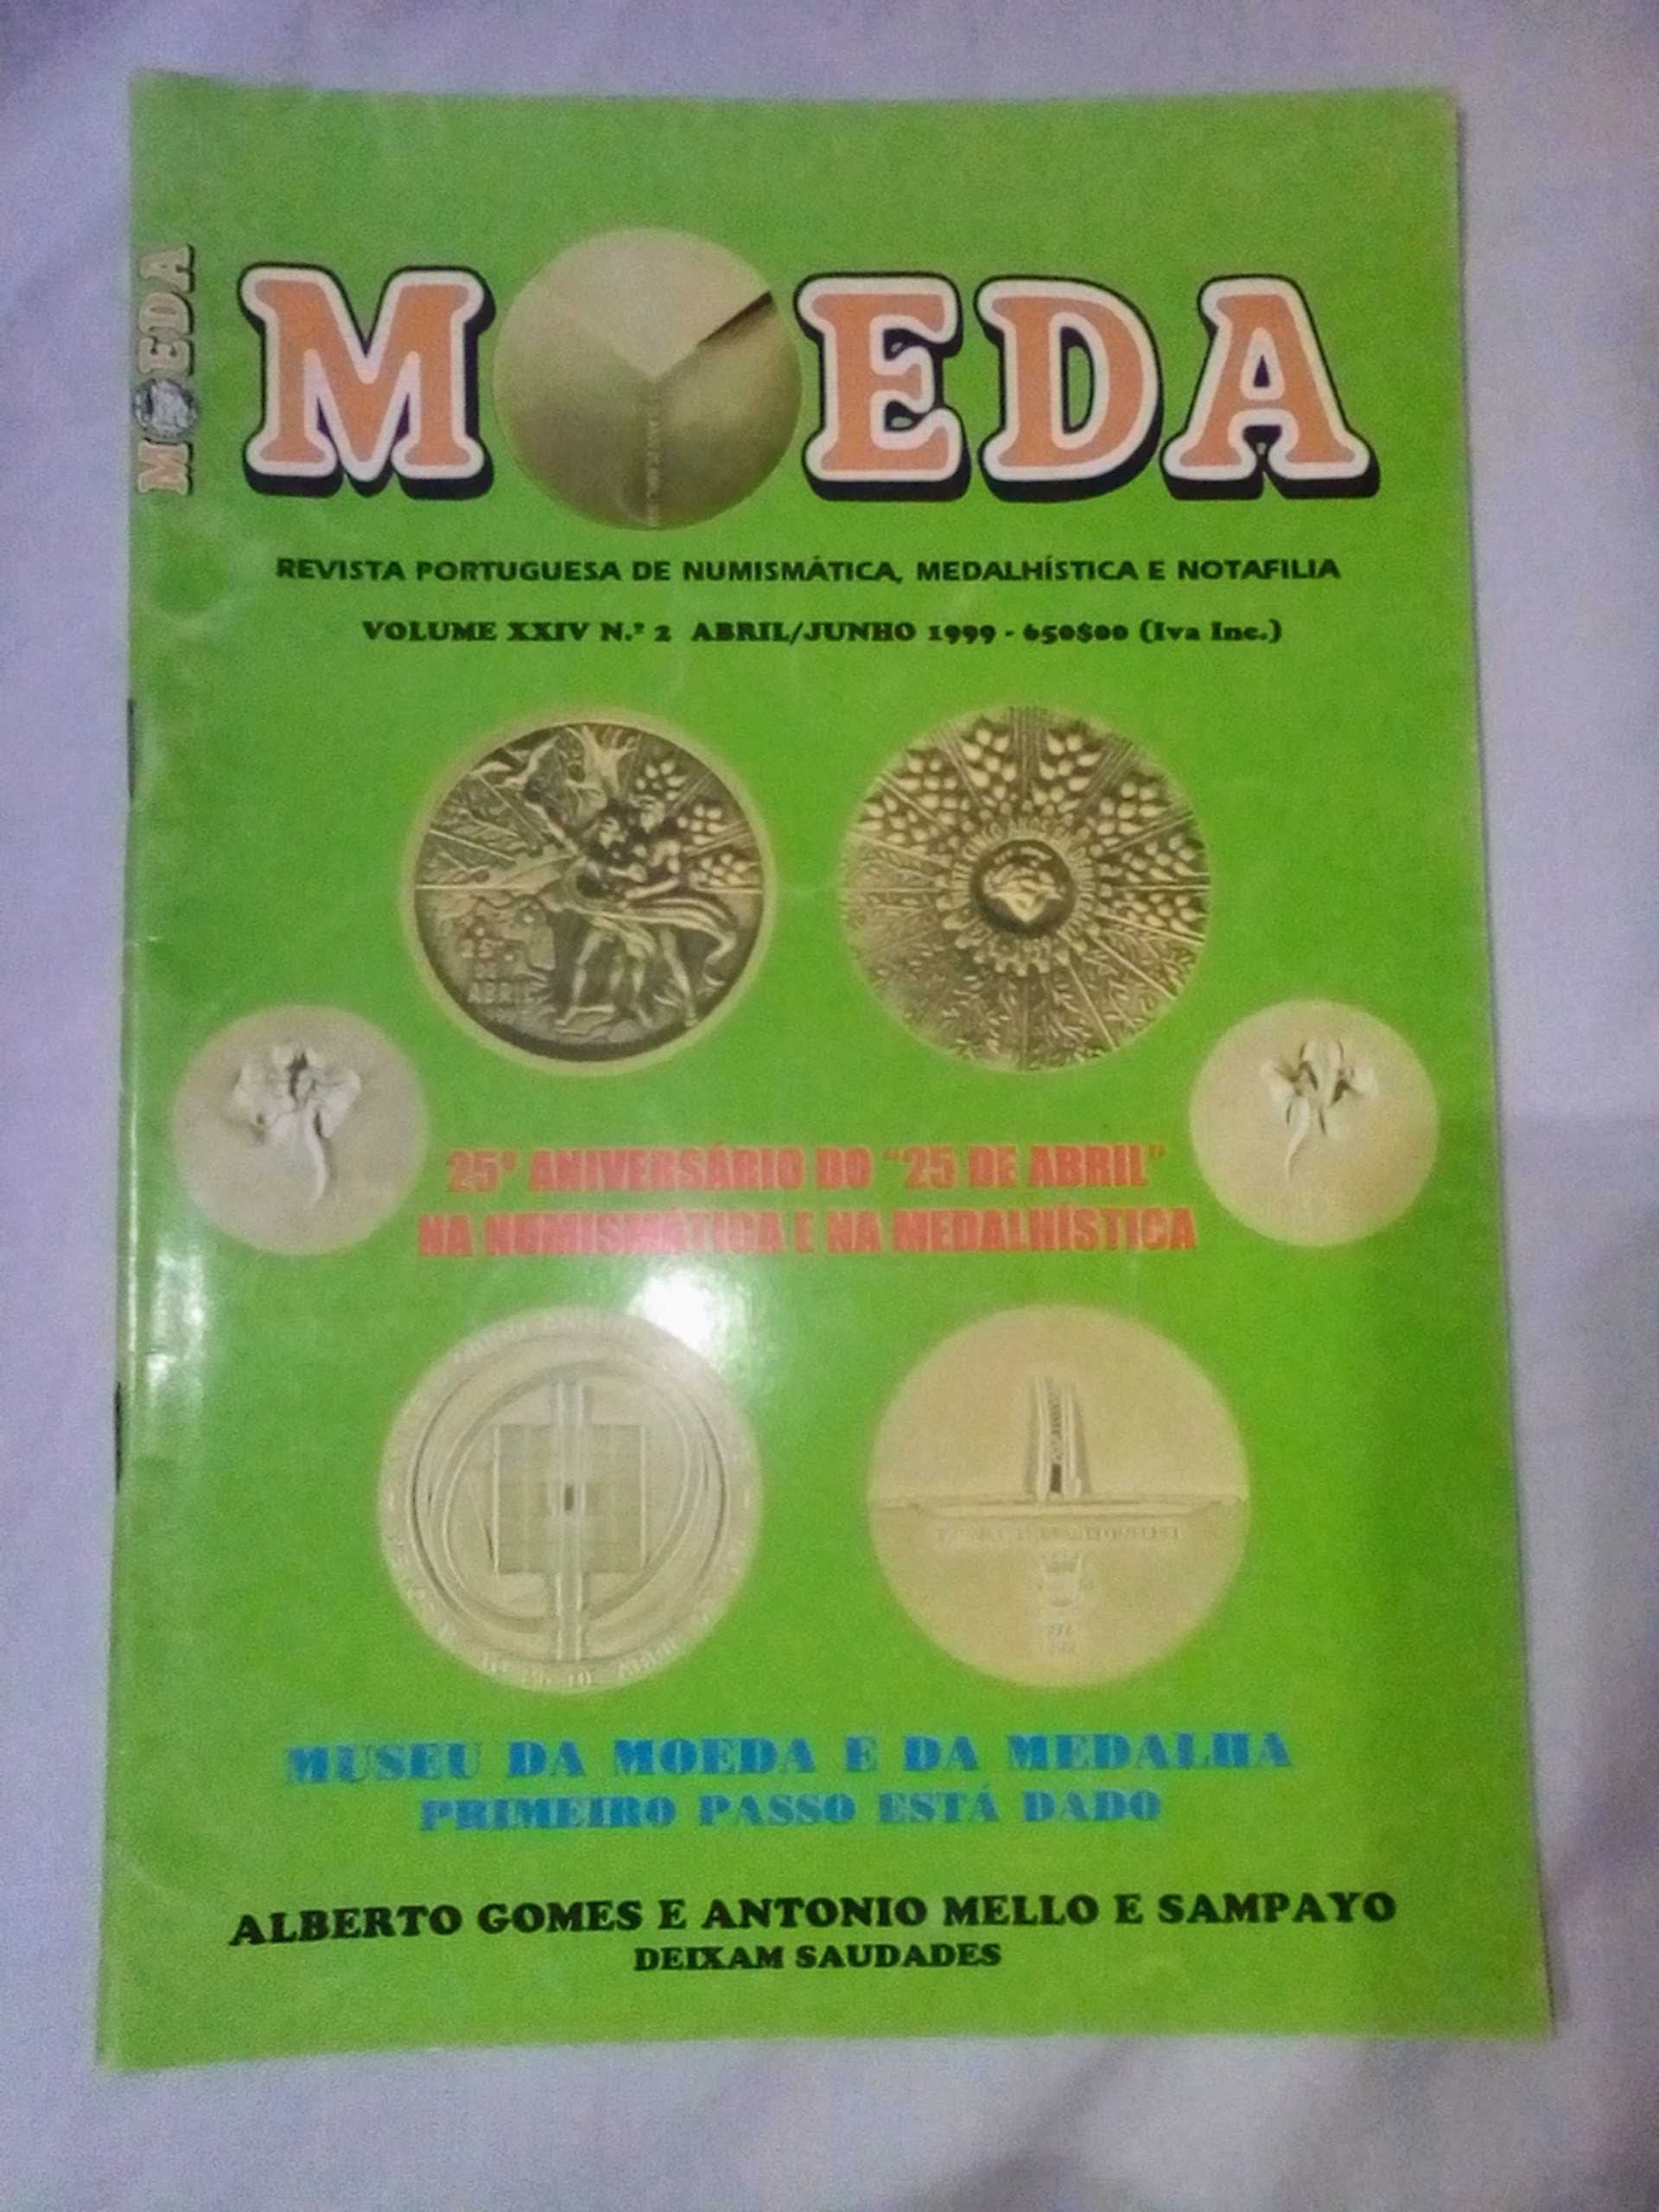 Revista Moeda - Volume XXIV Nº 2 Abril/Junho 1999